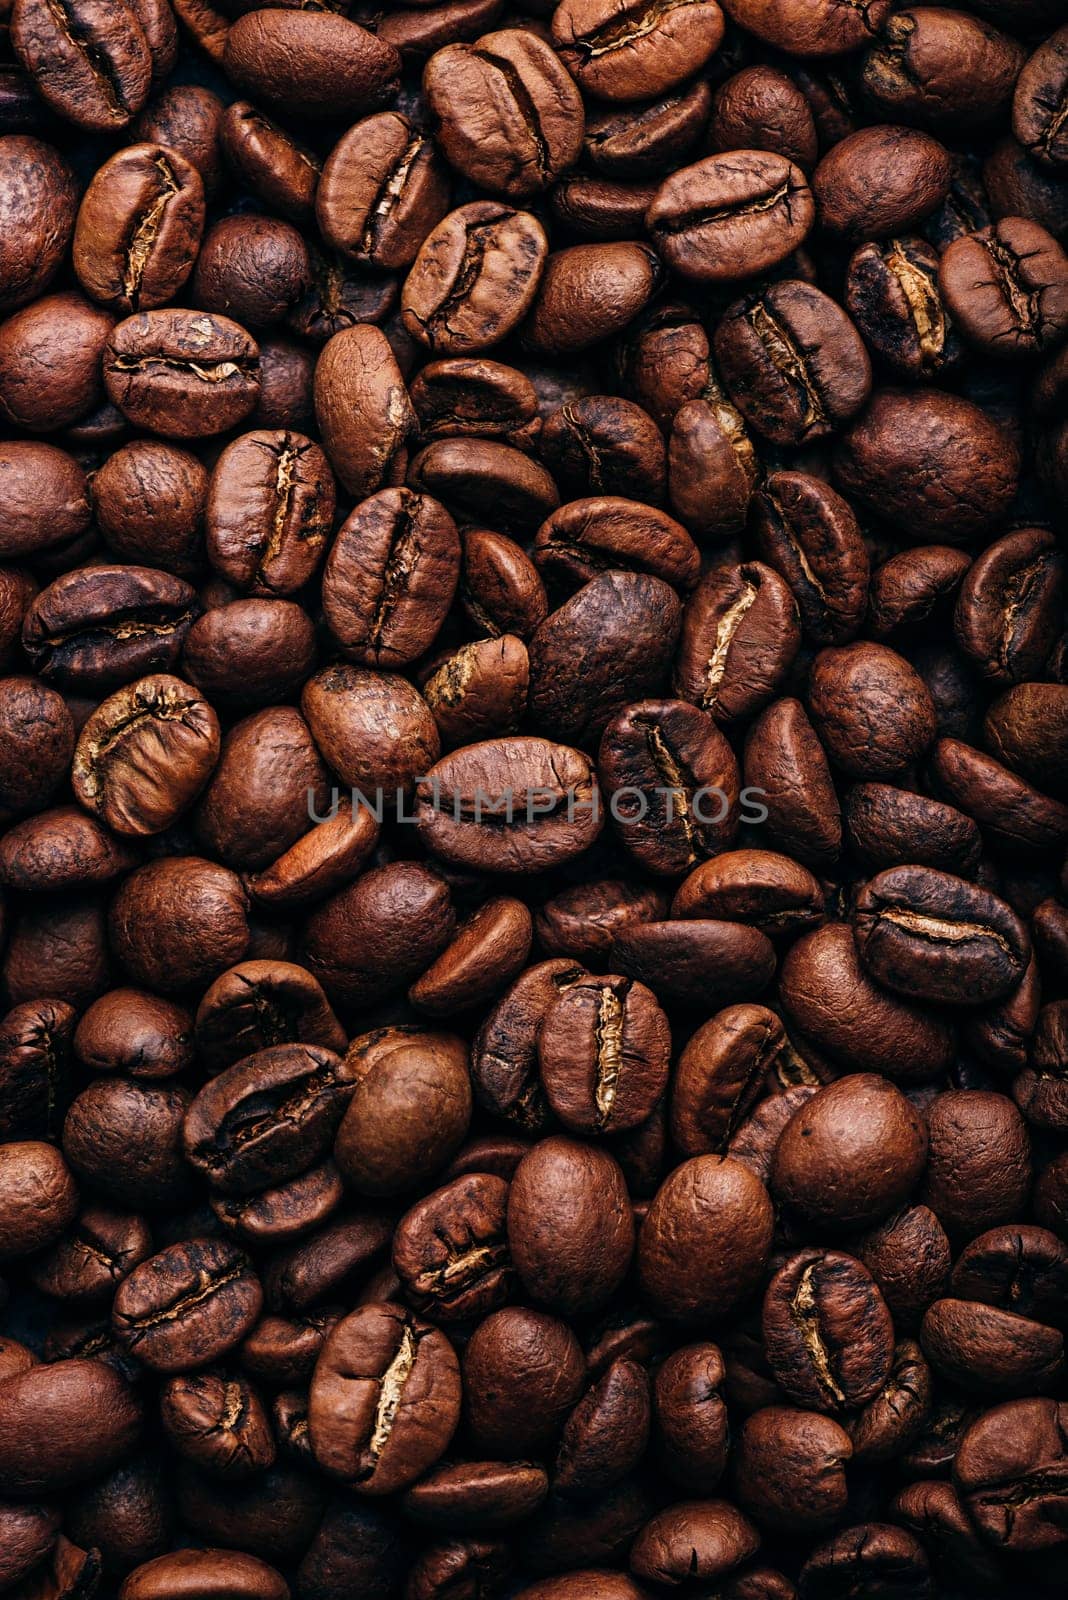 Fresh roasted coffee beans by Seva_blsv